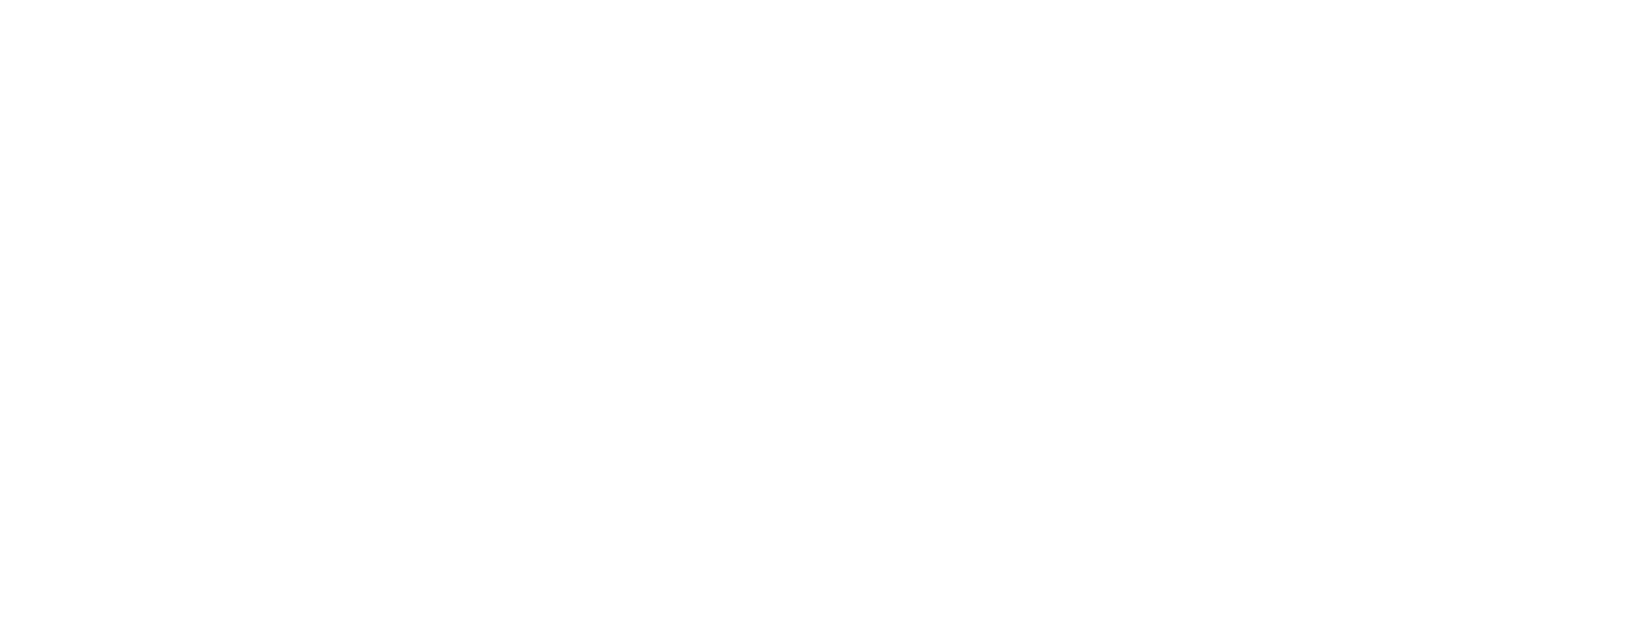 Wall Blush logo